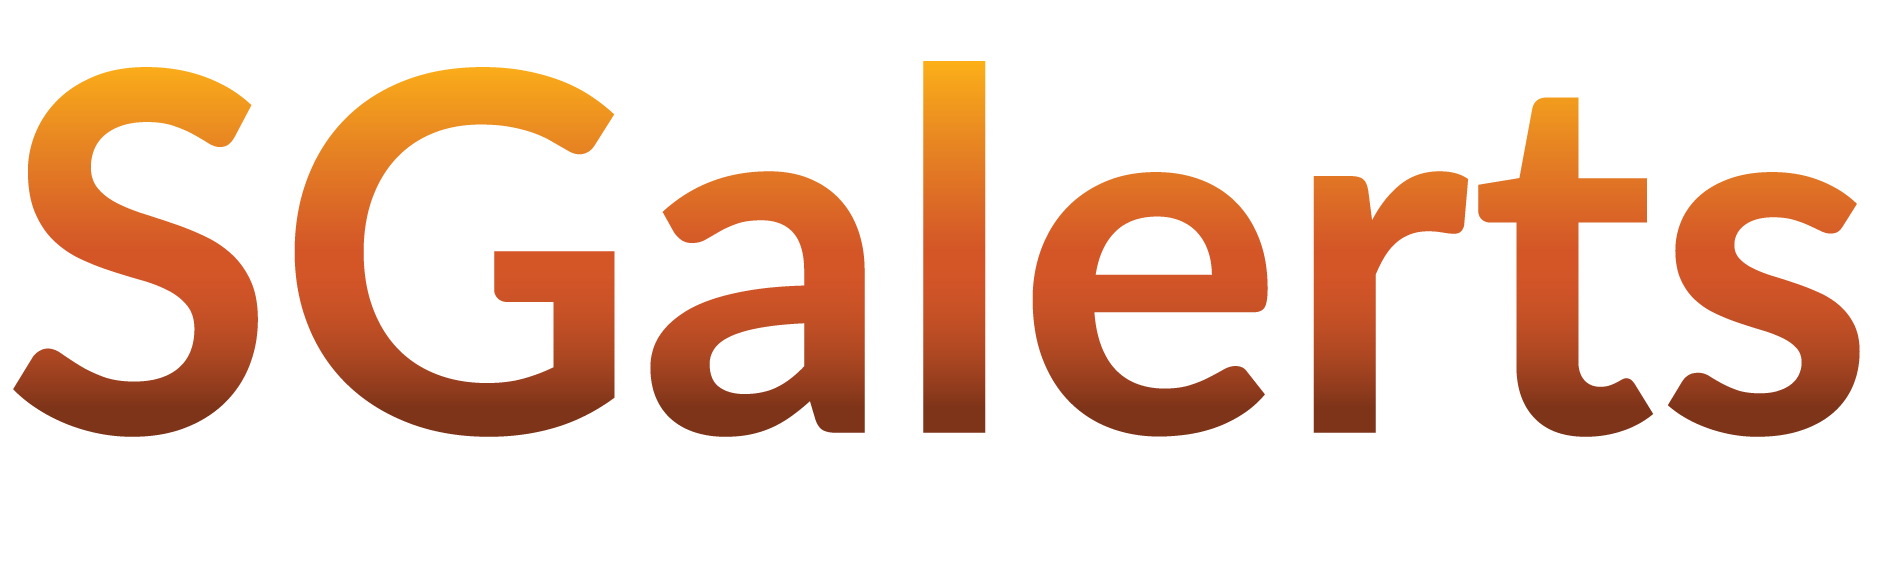 SGalerts logo